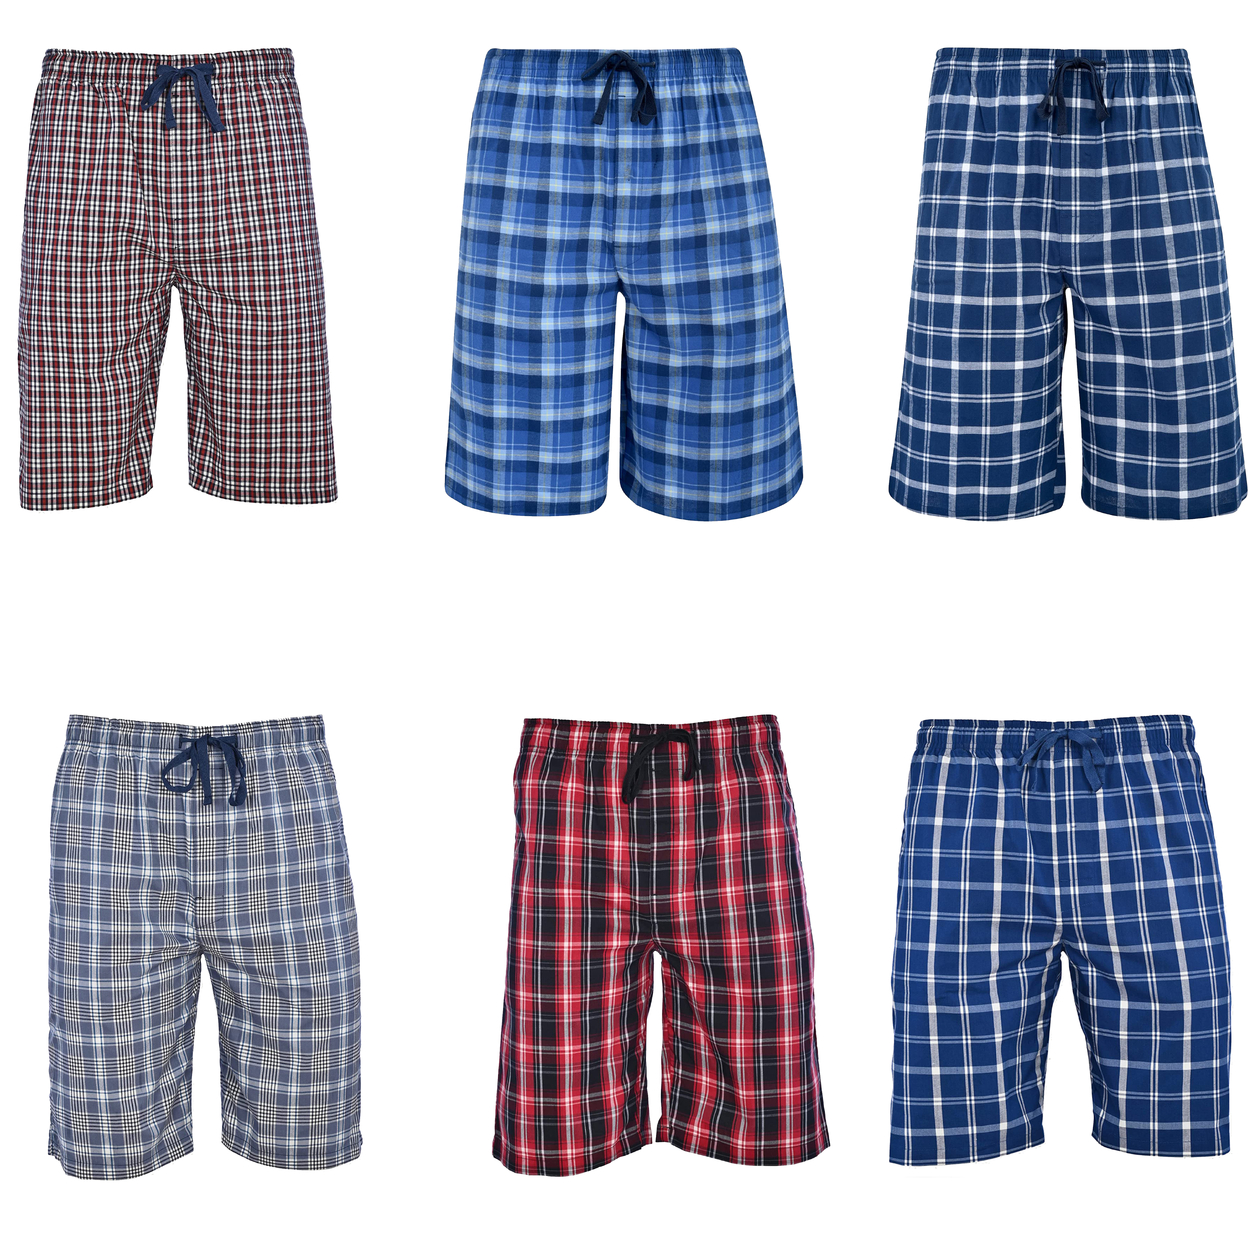 2-Pack: Men's Ultra Soft Plaid Lounge Pajama Sleep Wear Shorts - Grey & Grey, X-large